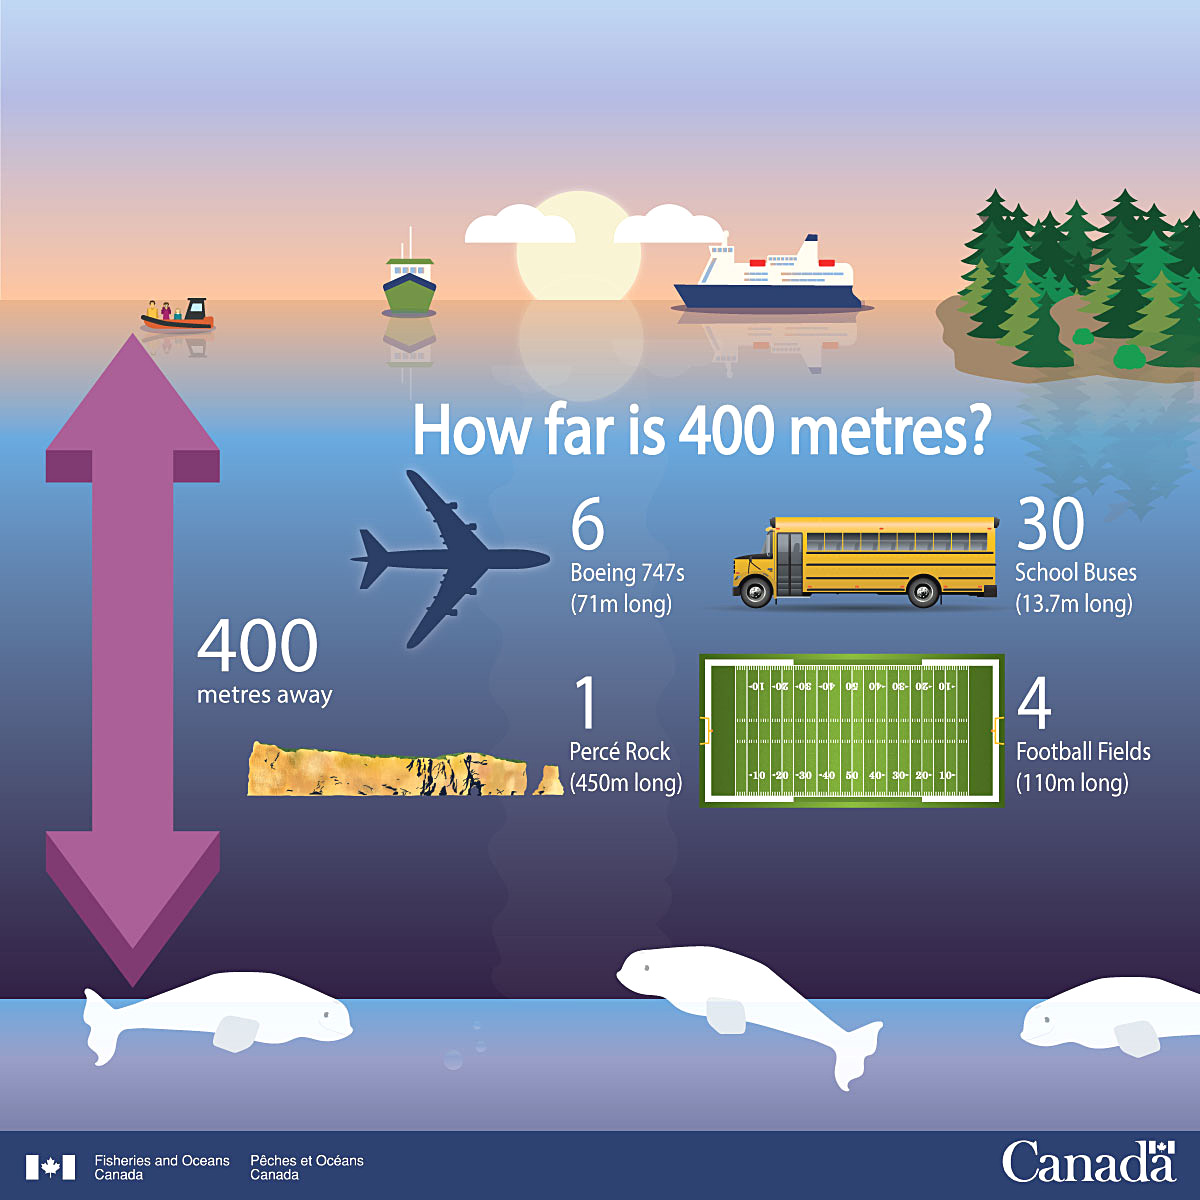  How far is 400 metres? 
    •	6 Boeing 747s (71m long).
    •	1 Percé Rock (450m long).
    •	30 School Buses (13,7m long).
    •	4 Football Fields (110m long).
    